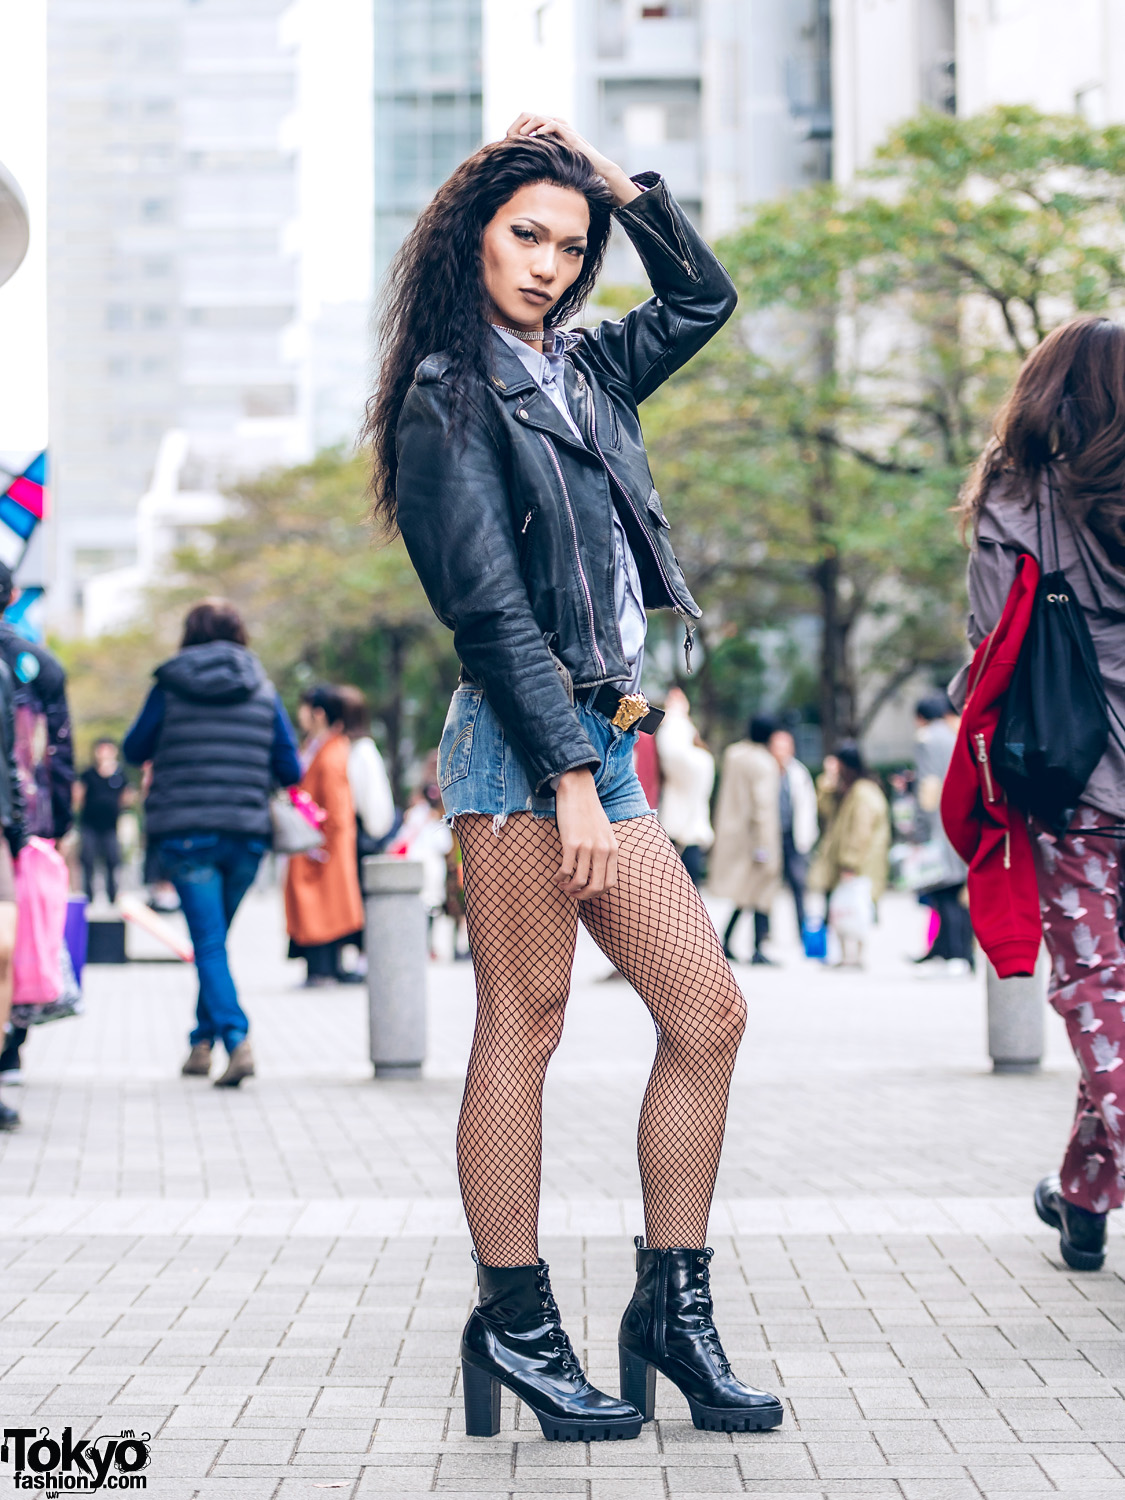 Beauty Student w/ Black Leather Jacket, Jean Shorts, Fishnet Stockings